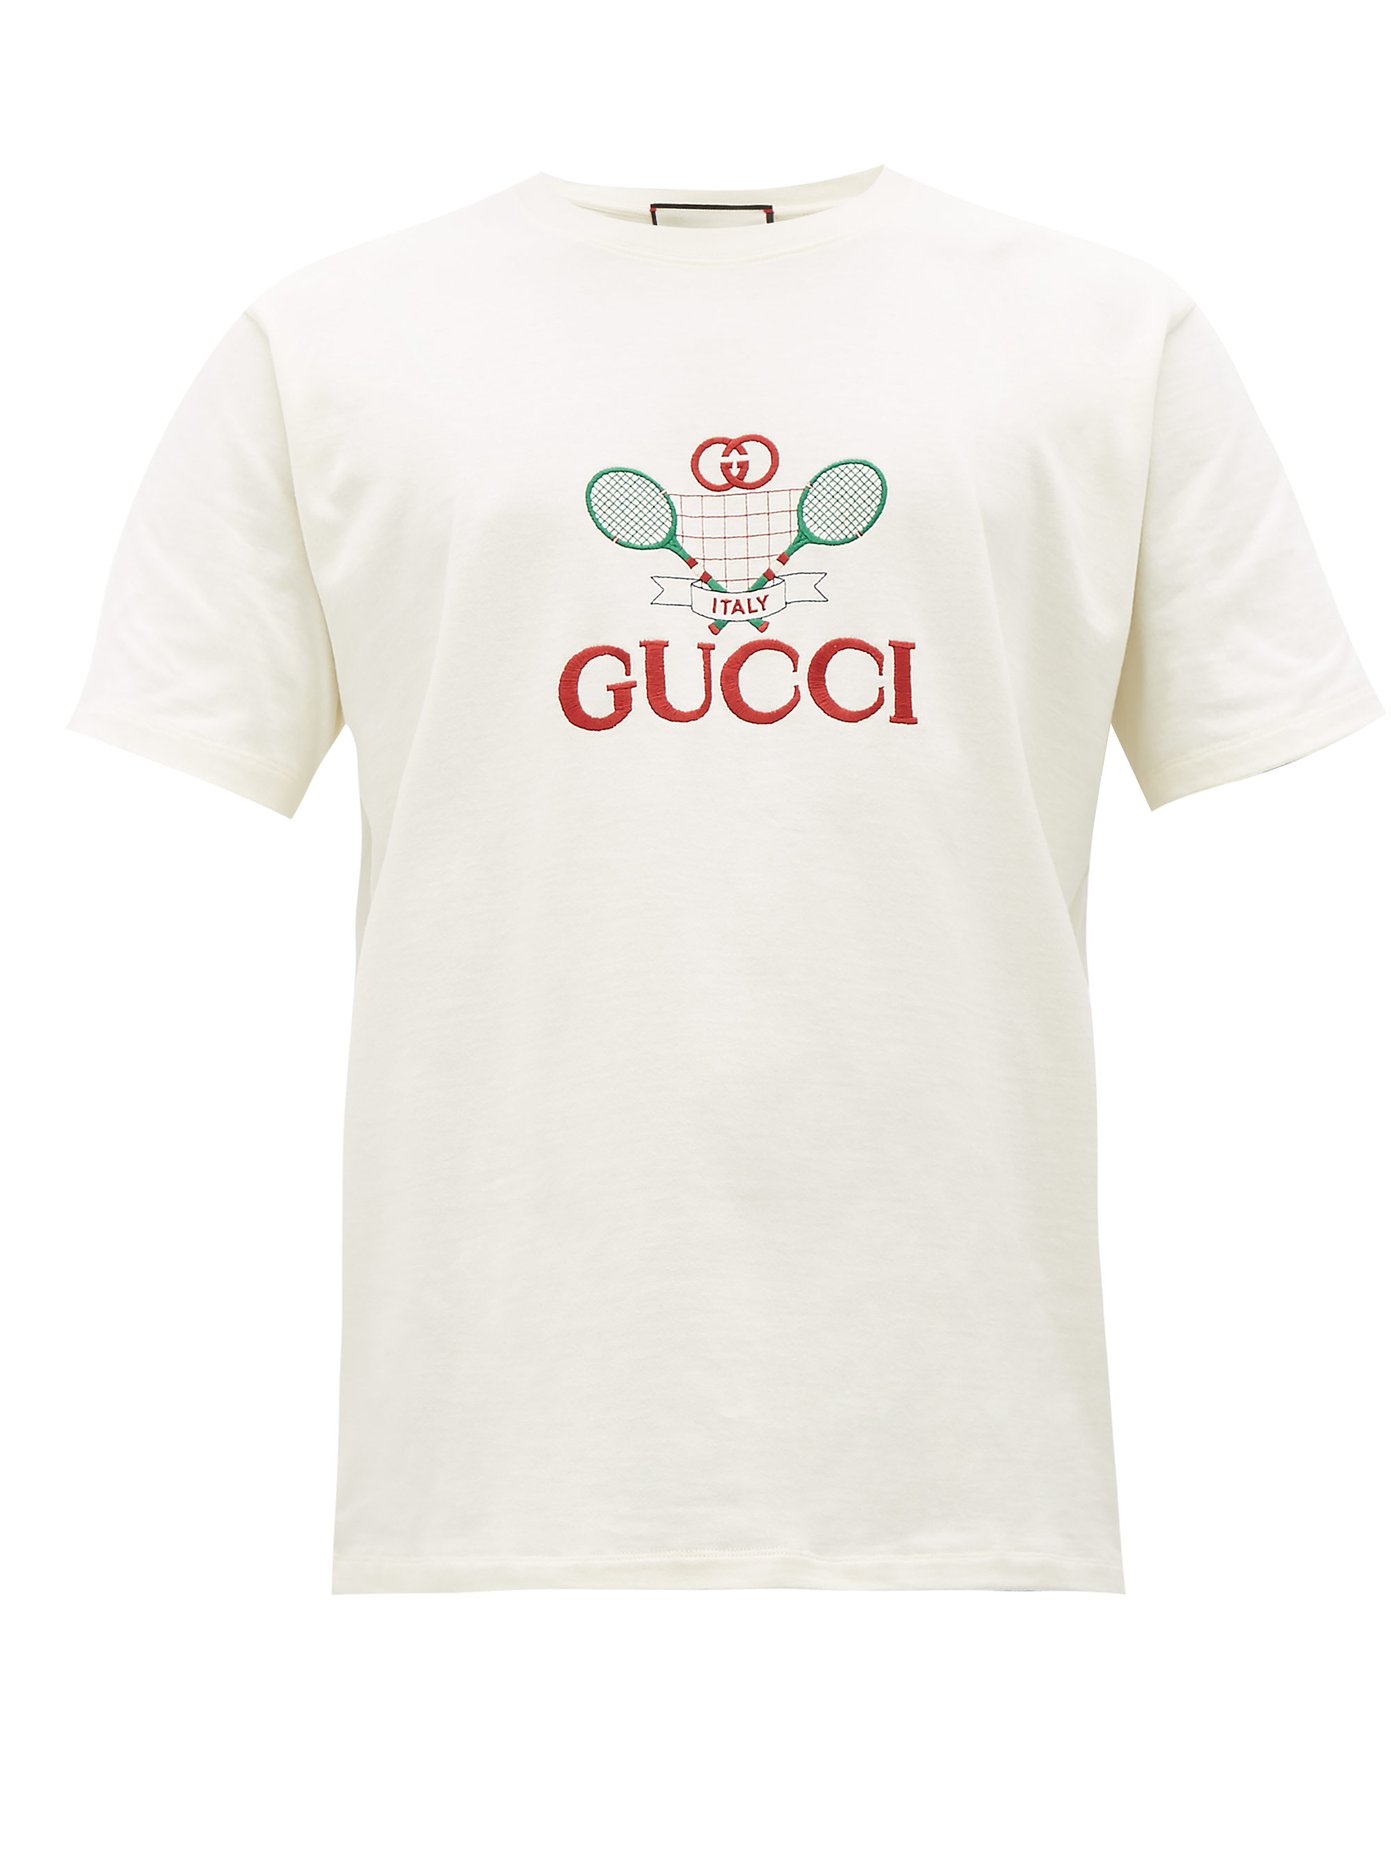 gucci t shirt tennis